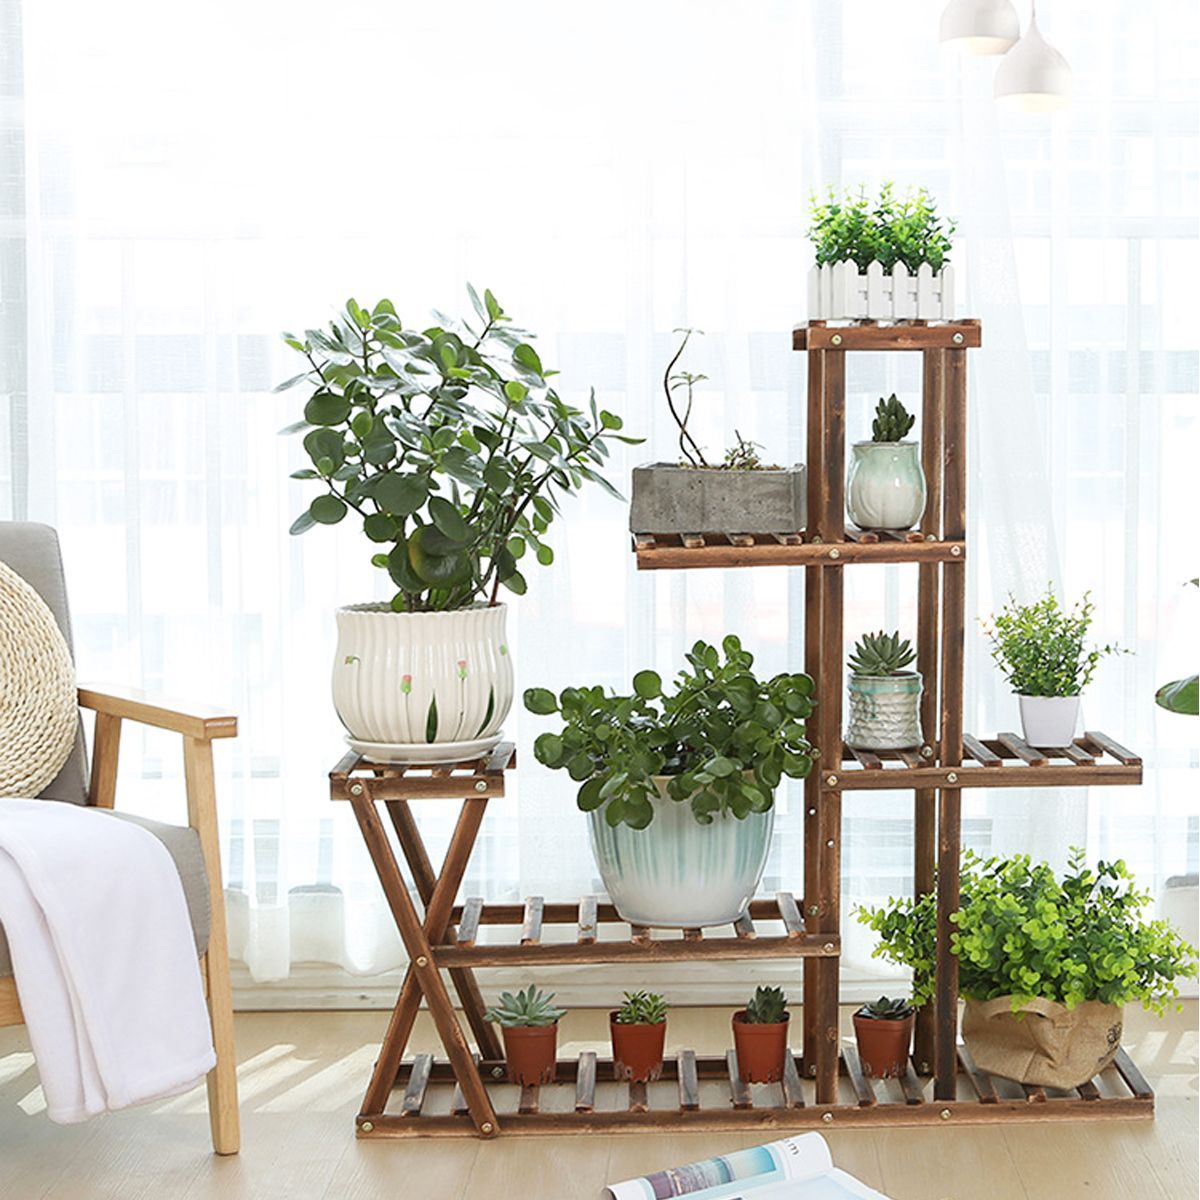 Wooden-Plant-Flower-Pot-Stand-Shelf--Indoor-Outdoor-Garden-Planter-With-Wheels-1652395